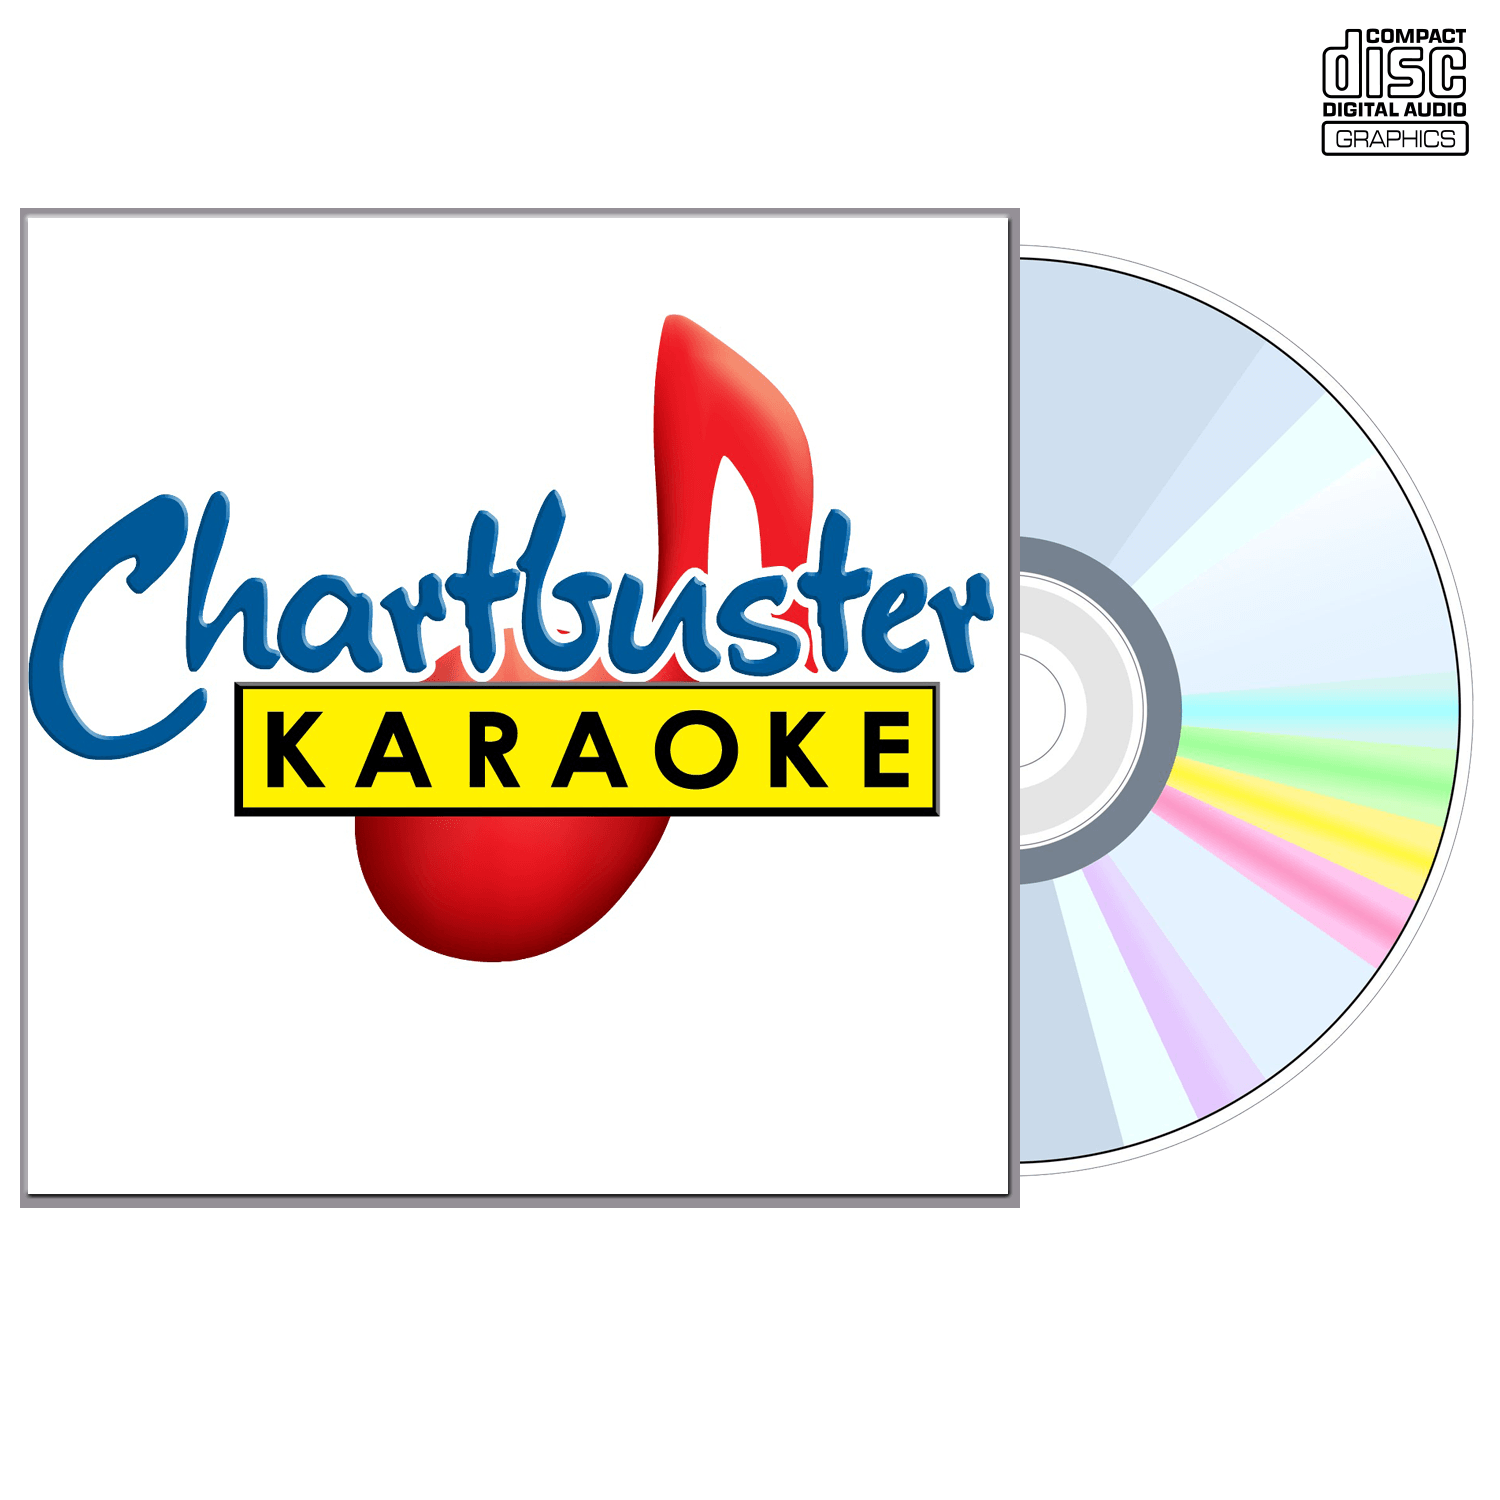 Stevie Wonder - CD+G - Chartbuster Karaoke - Karaoke Home Entertainment